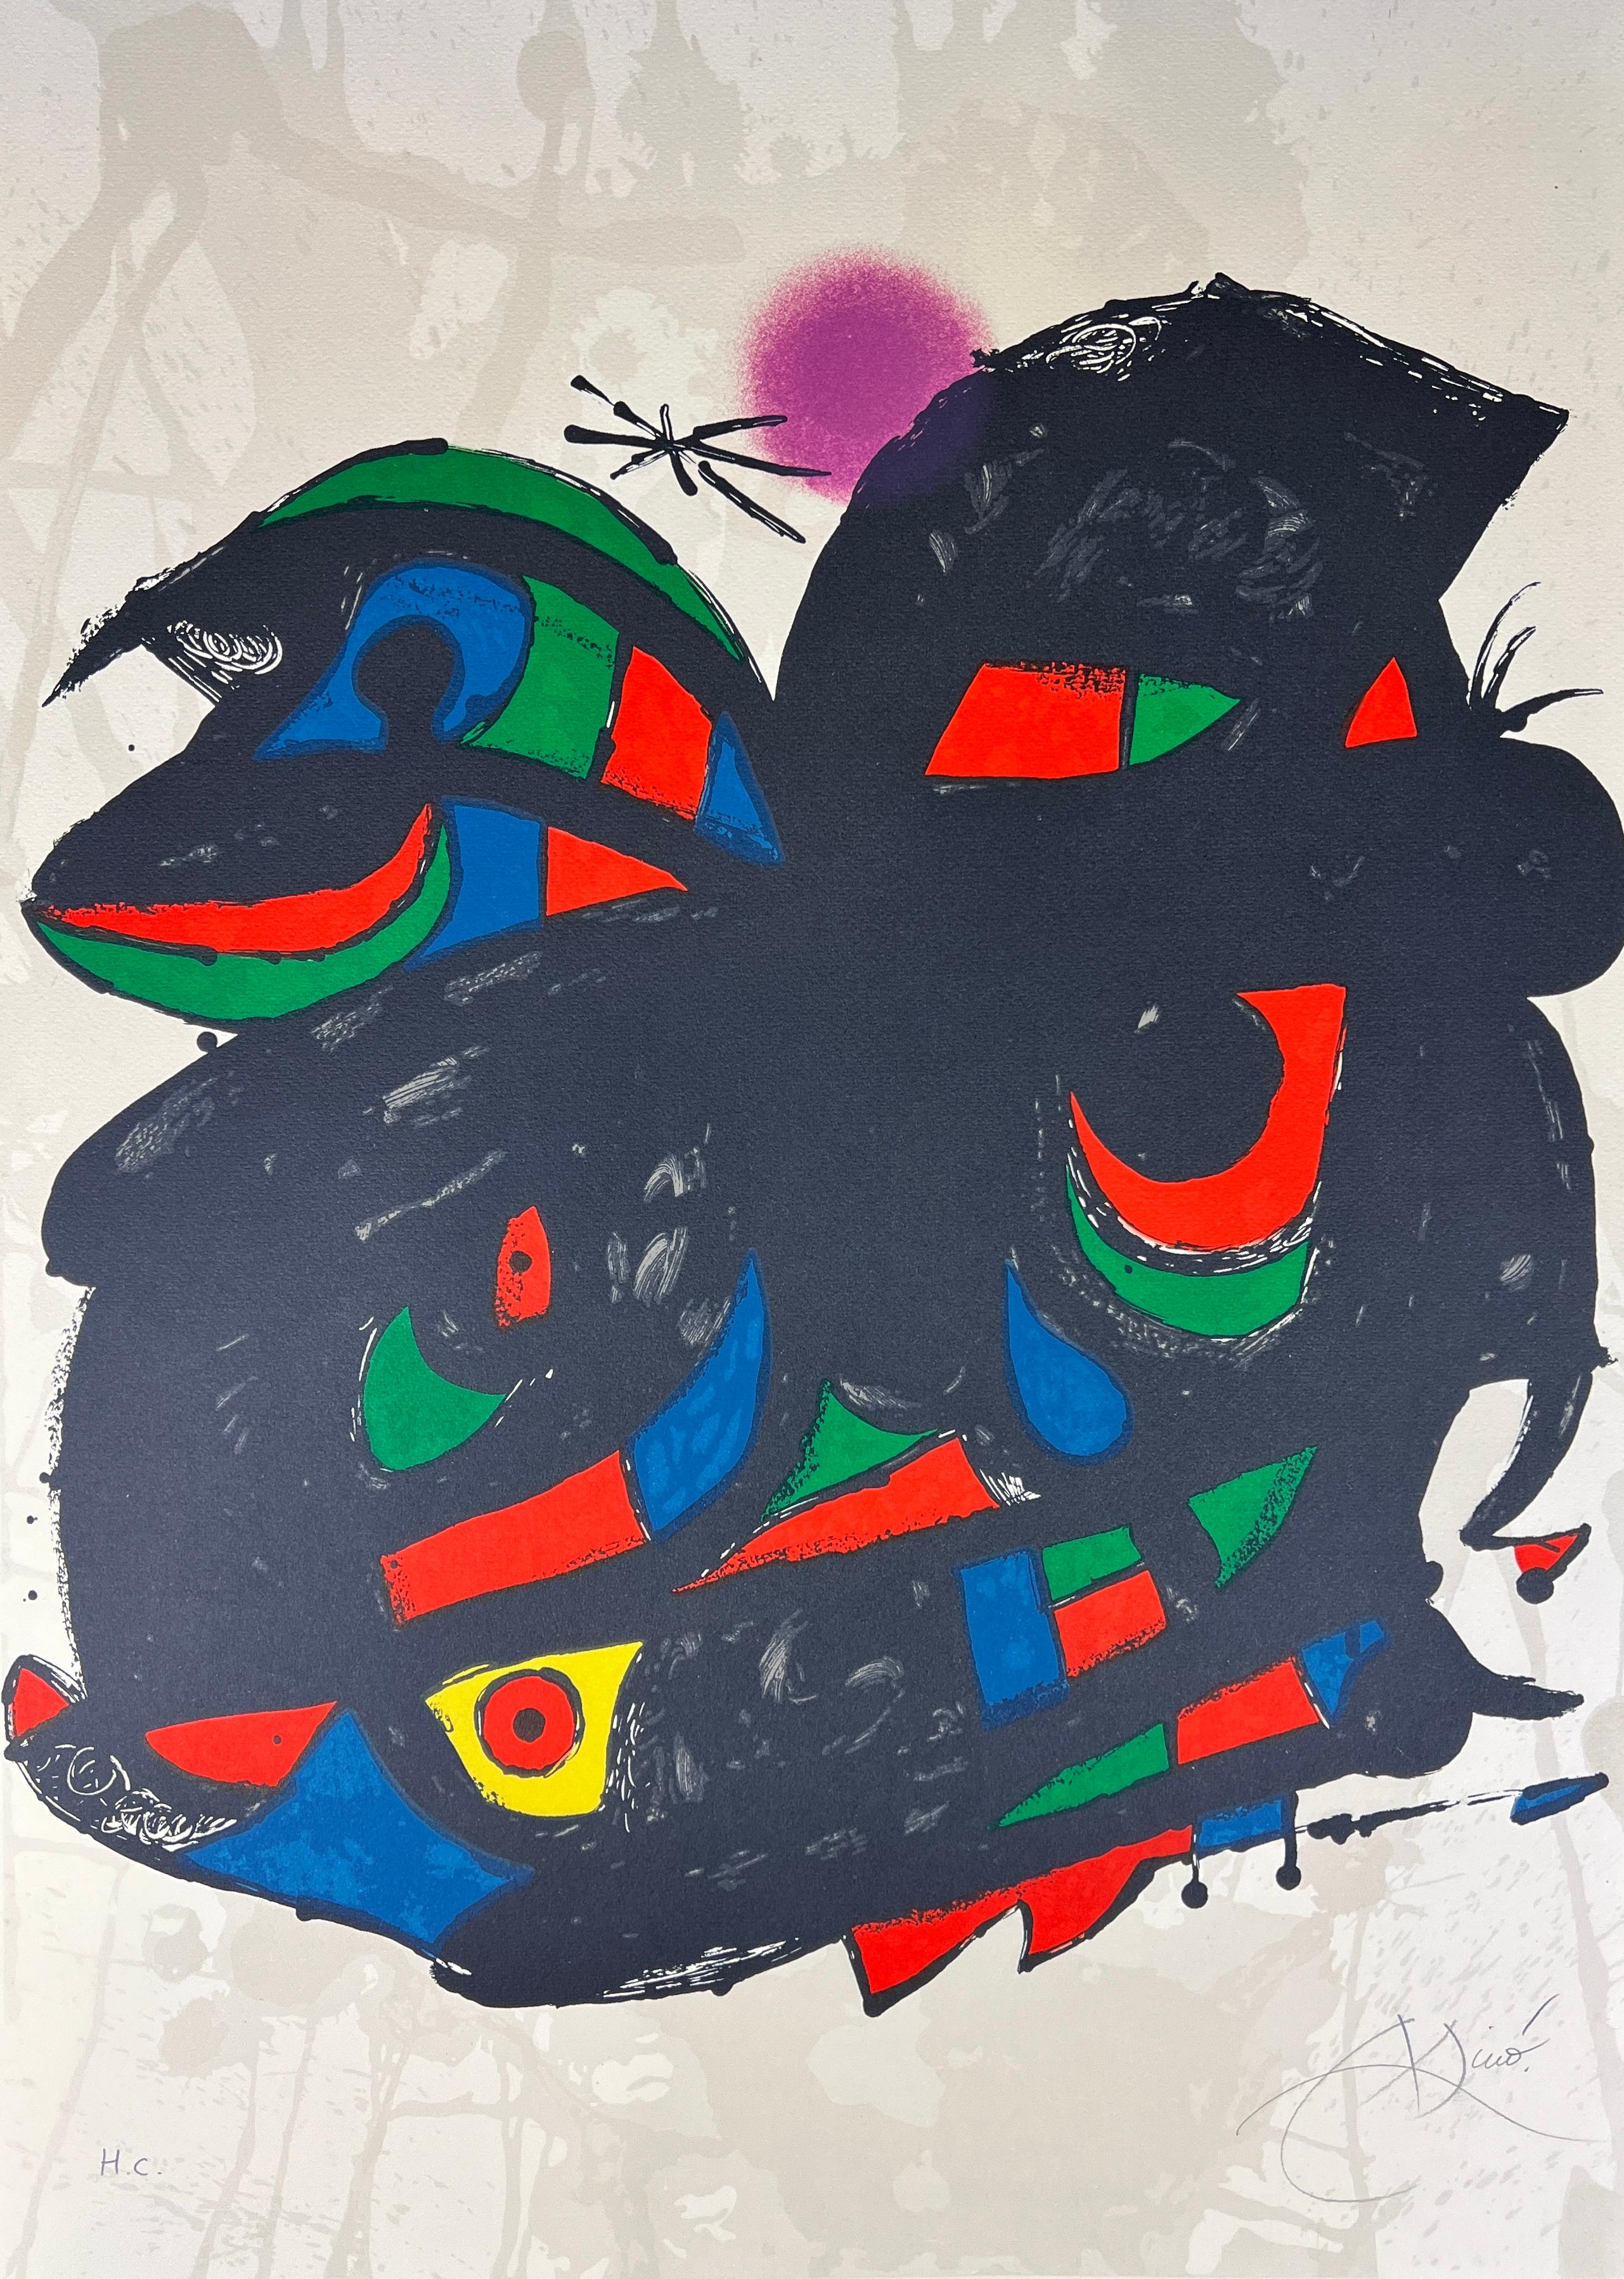 How do you authenticate a Joan Miró piece?